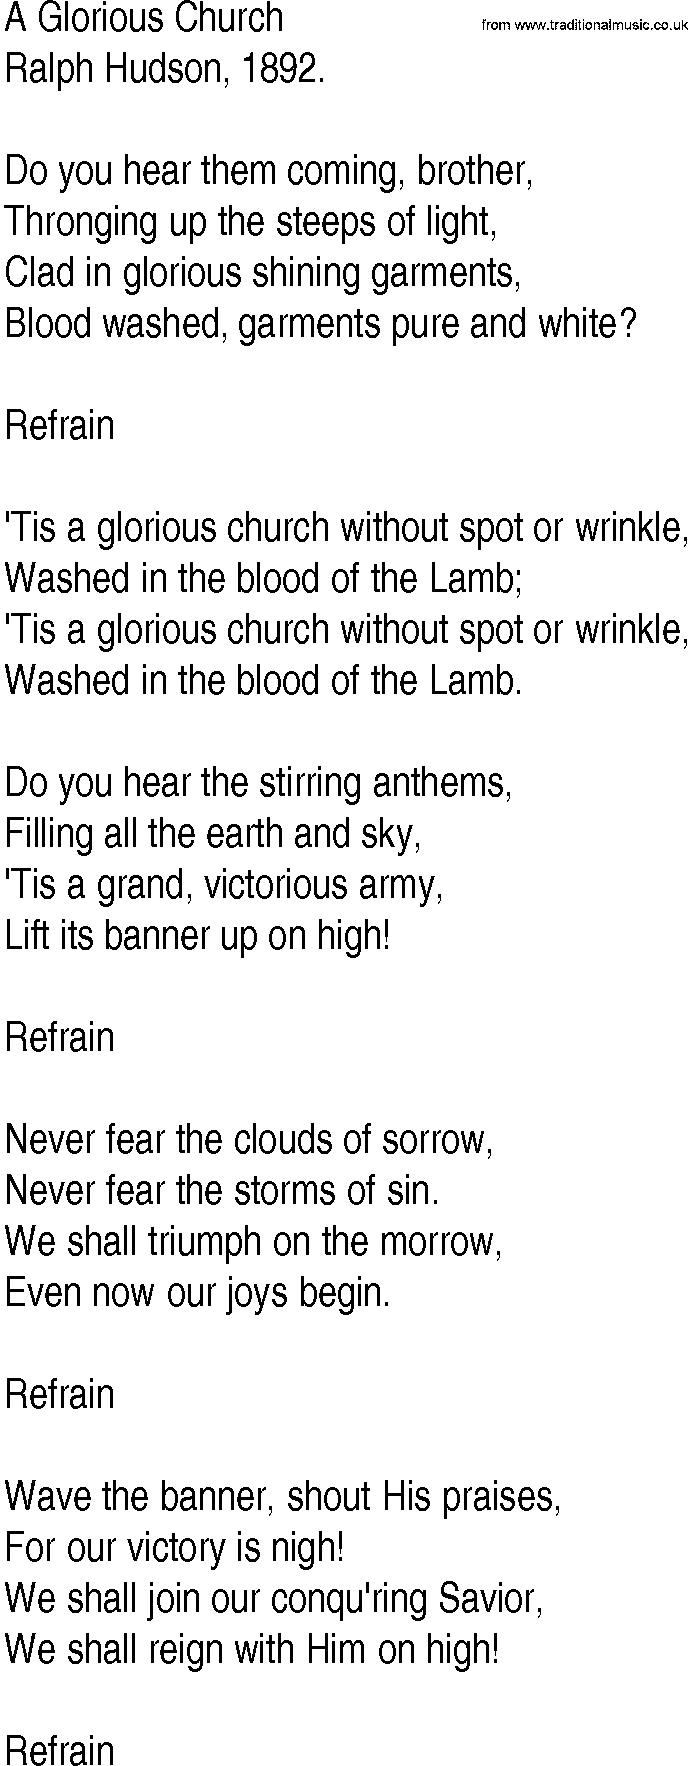 Hymn and Gospel Song: A Glorious Church by Ralph Hudson lyrics